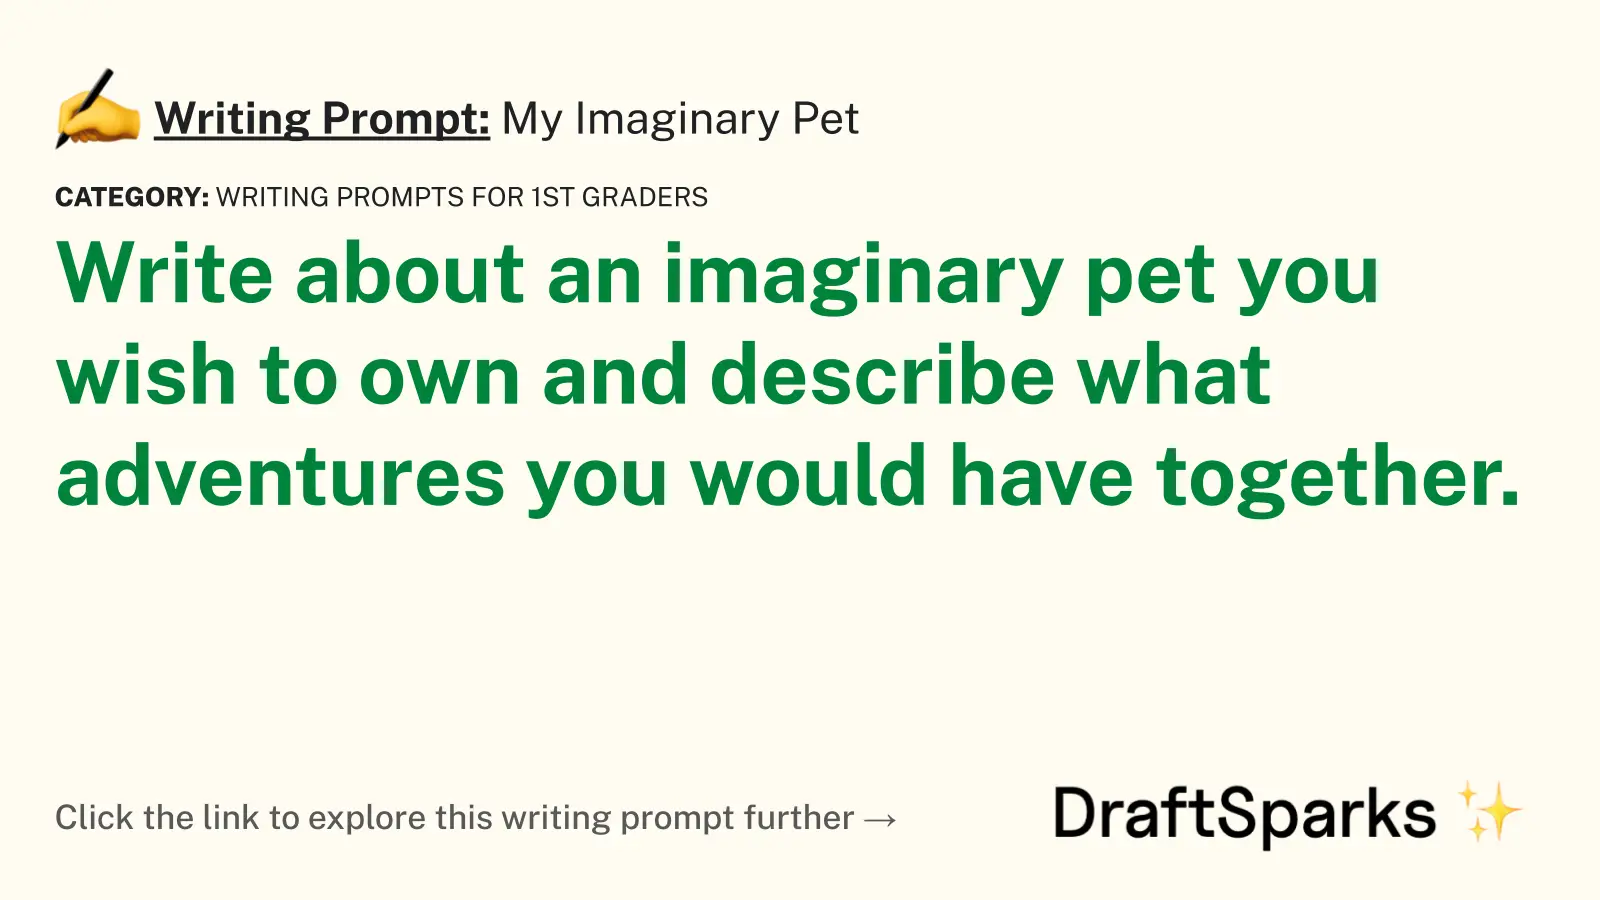 My Imaginary Pet